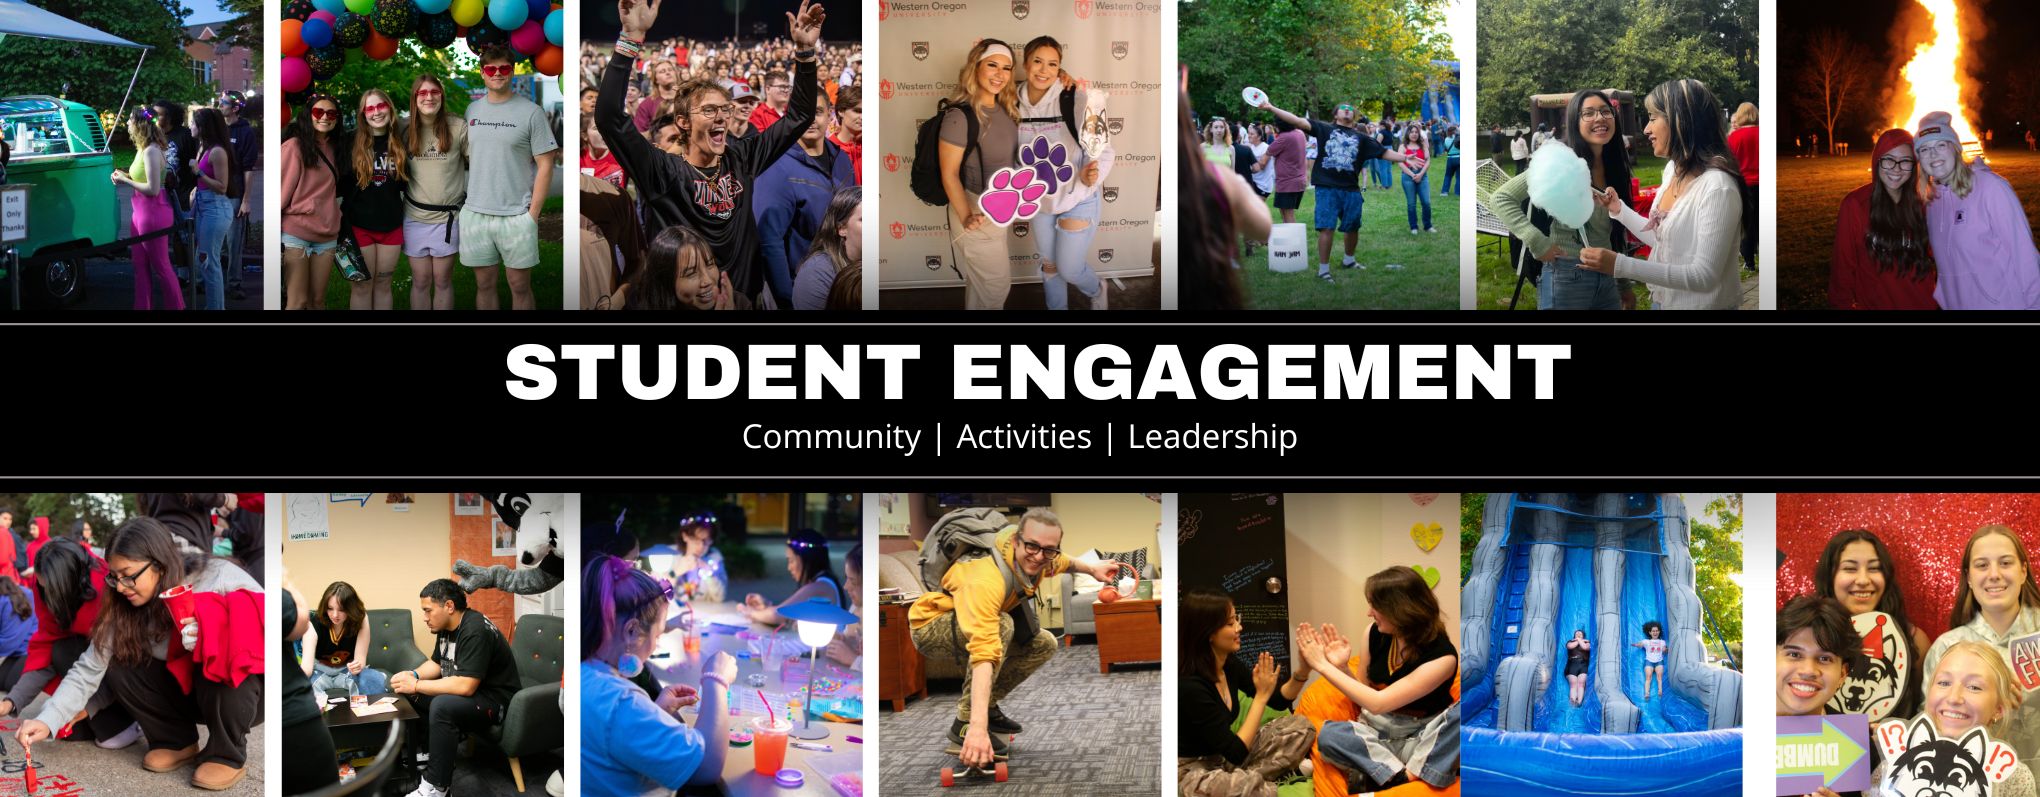 Student Engagement - Community | Activity | Leadership